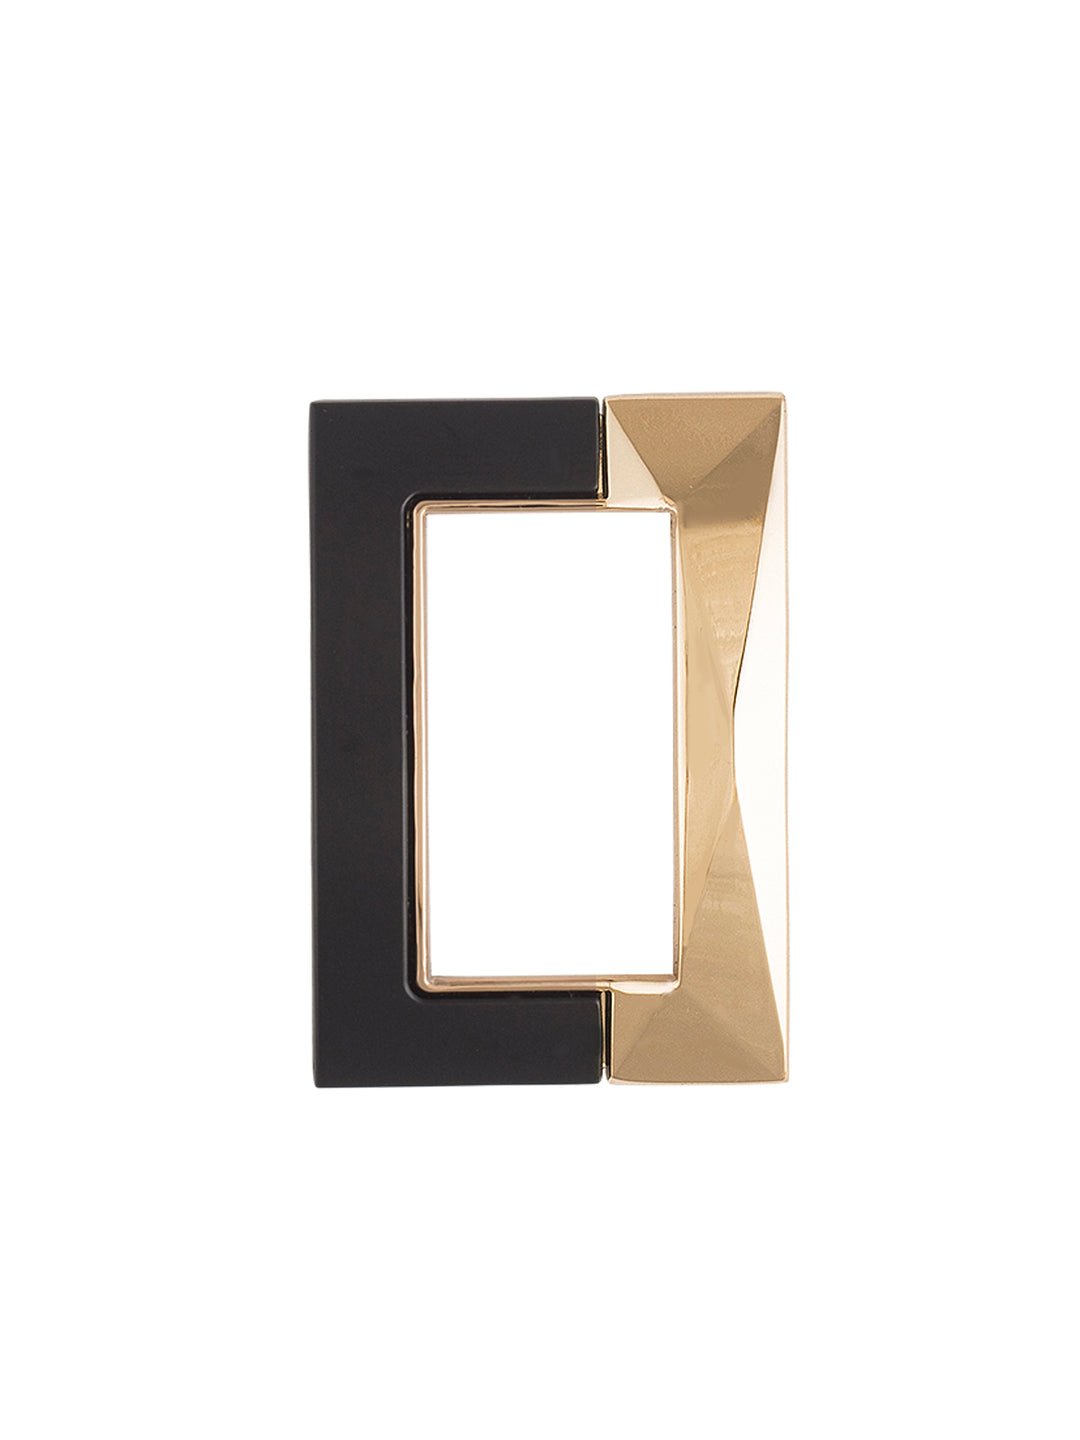 Rectangular Black & Gold Fashionable Buckle Accessory